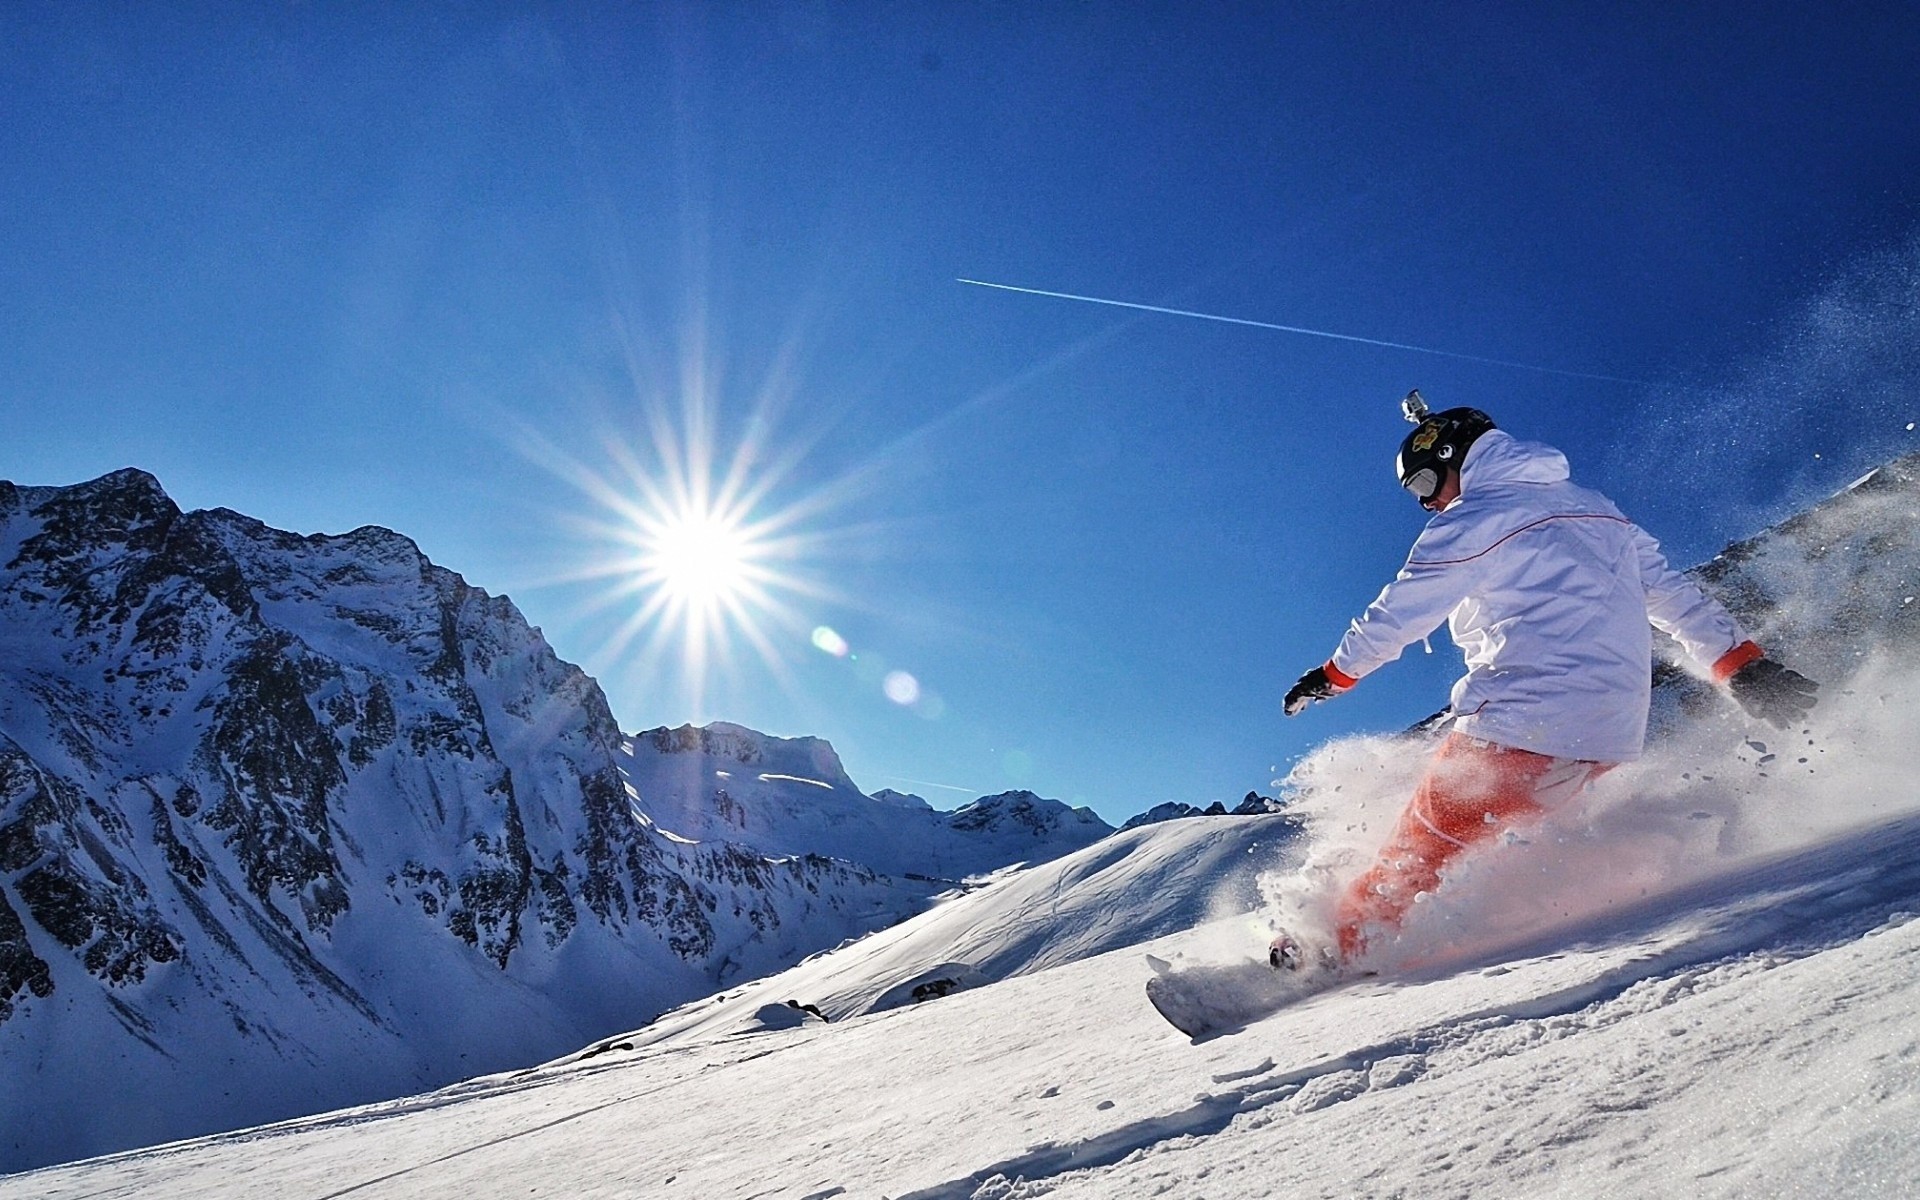 snowboard wallpaper,snow,skier,winter sport,winter,snowboard